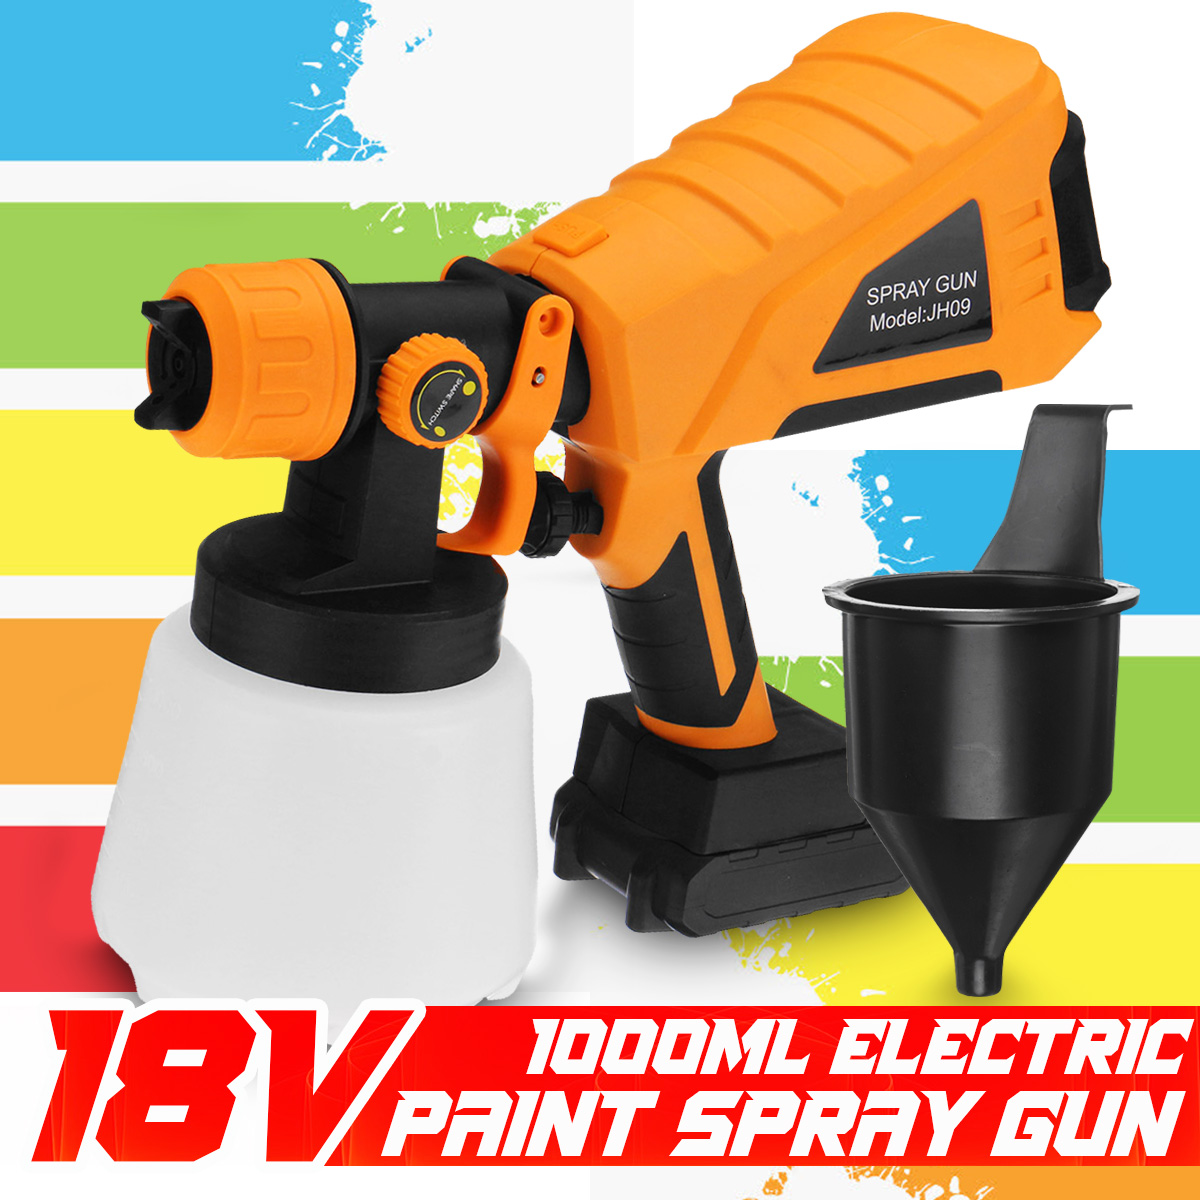 18V-1000ML-High-Power-Electric-Spray-Gun-Household-Spray-Paint-with-Li-ion-Battery-Regulation-Spraye-1863067-2